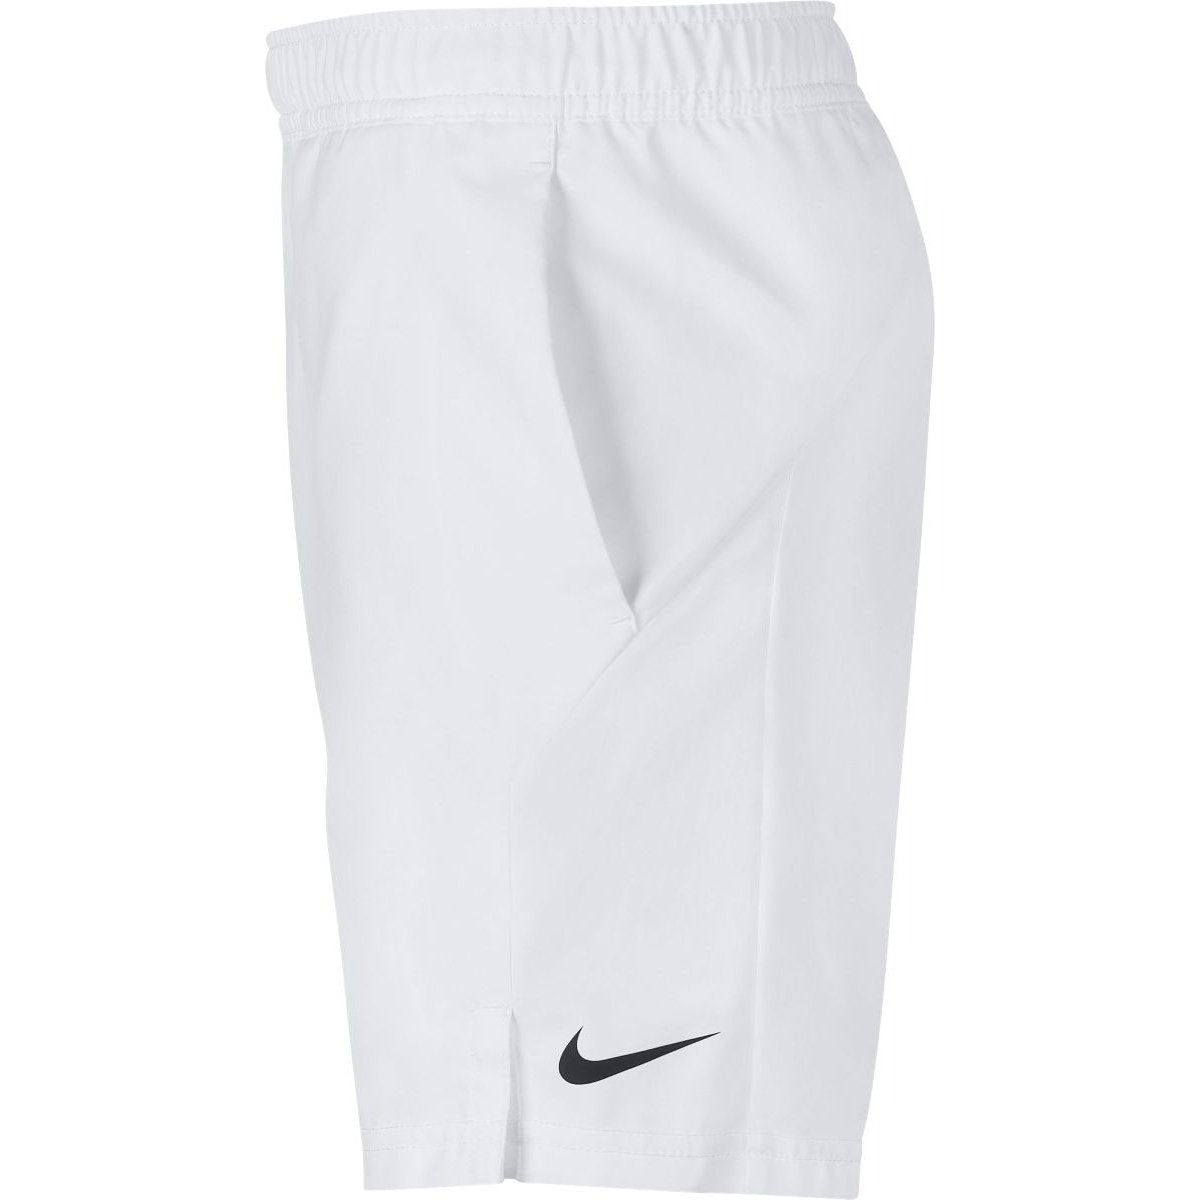 NikeCourt Dry Boys' Tennis Short - Sporty Pro